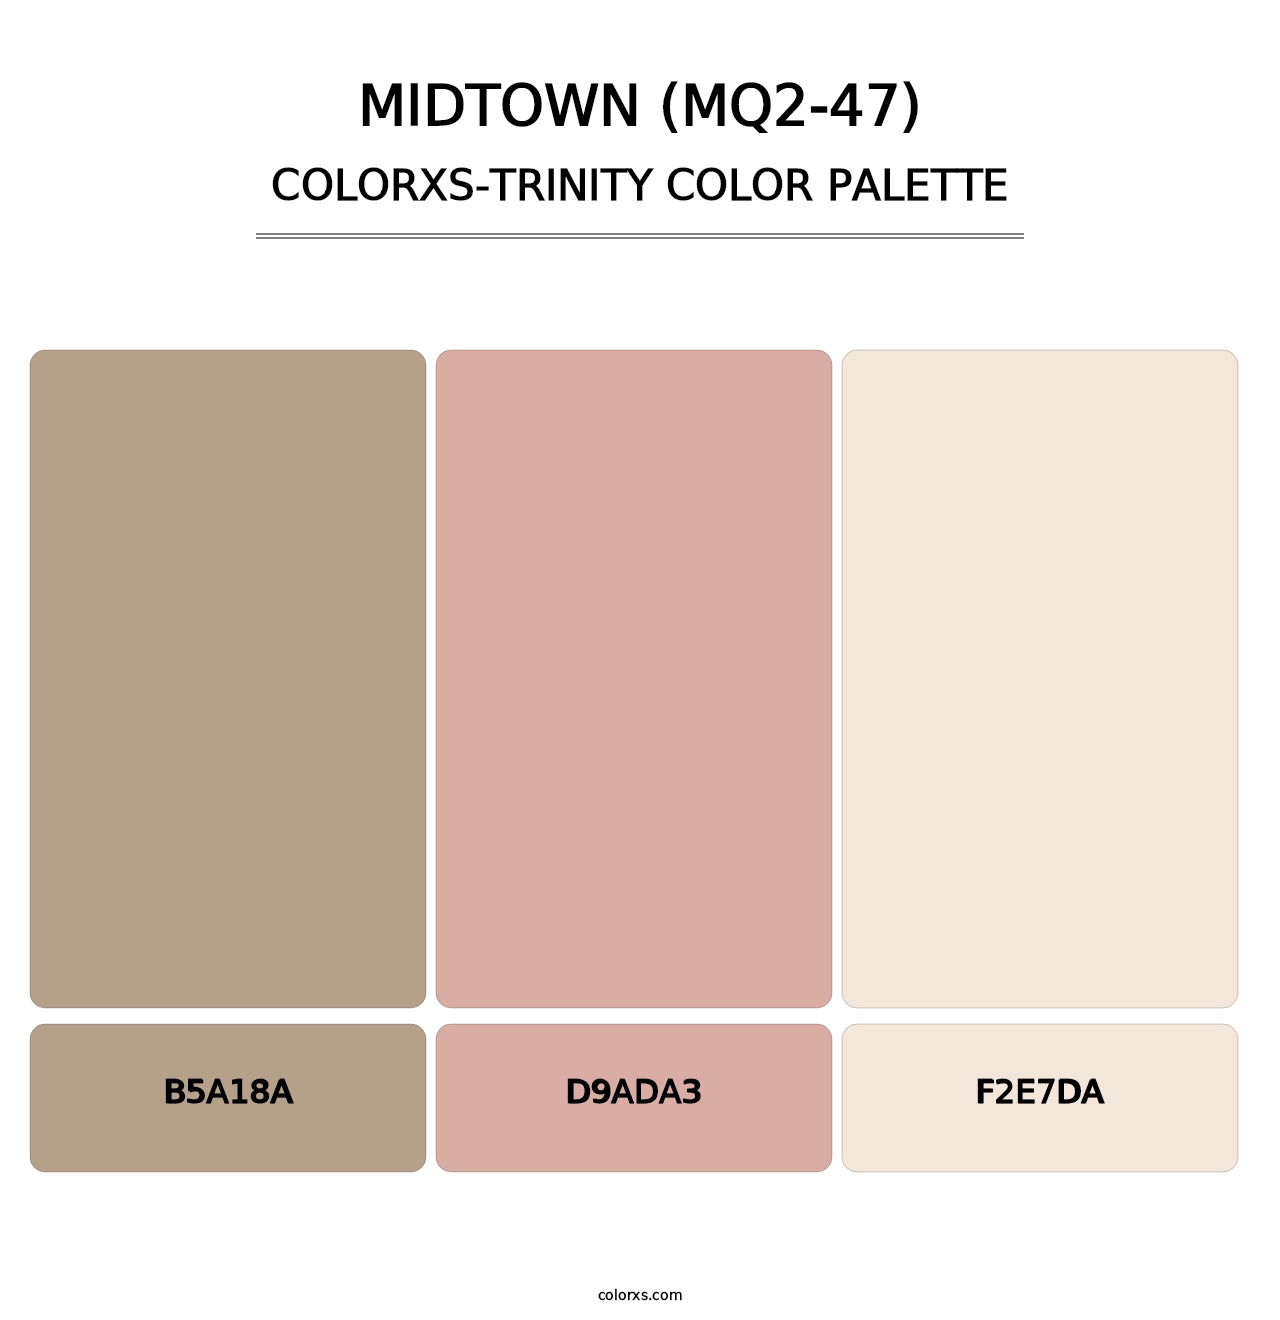 Midtown (MQ2-47) - Colorxs Trinity Palette